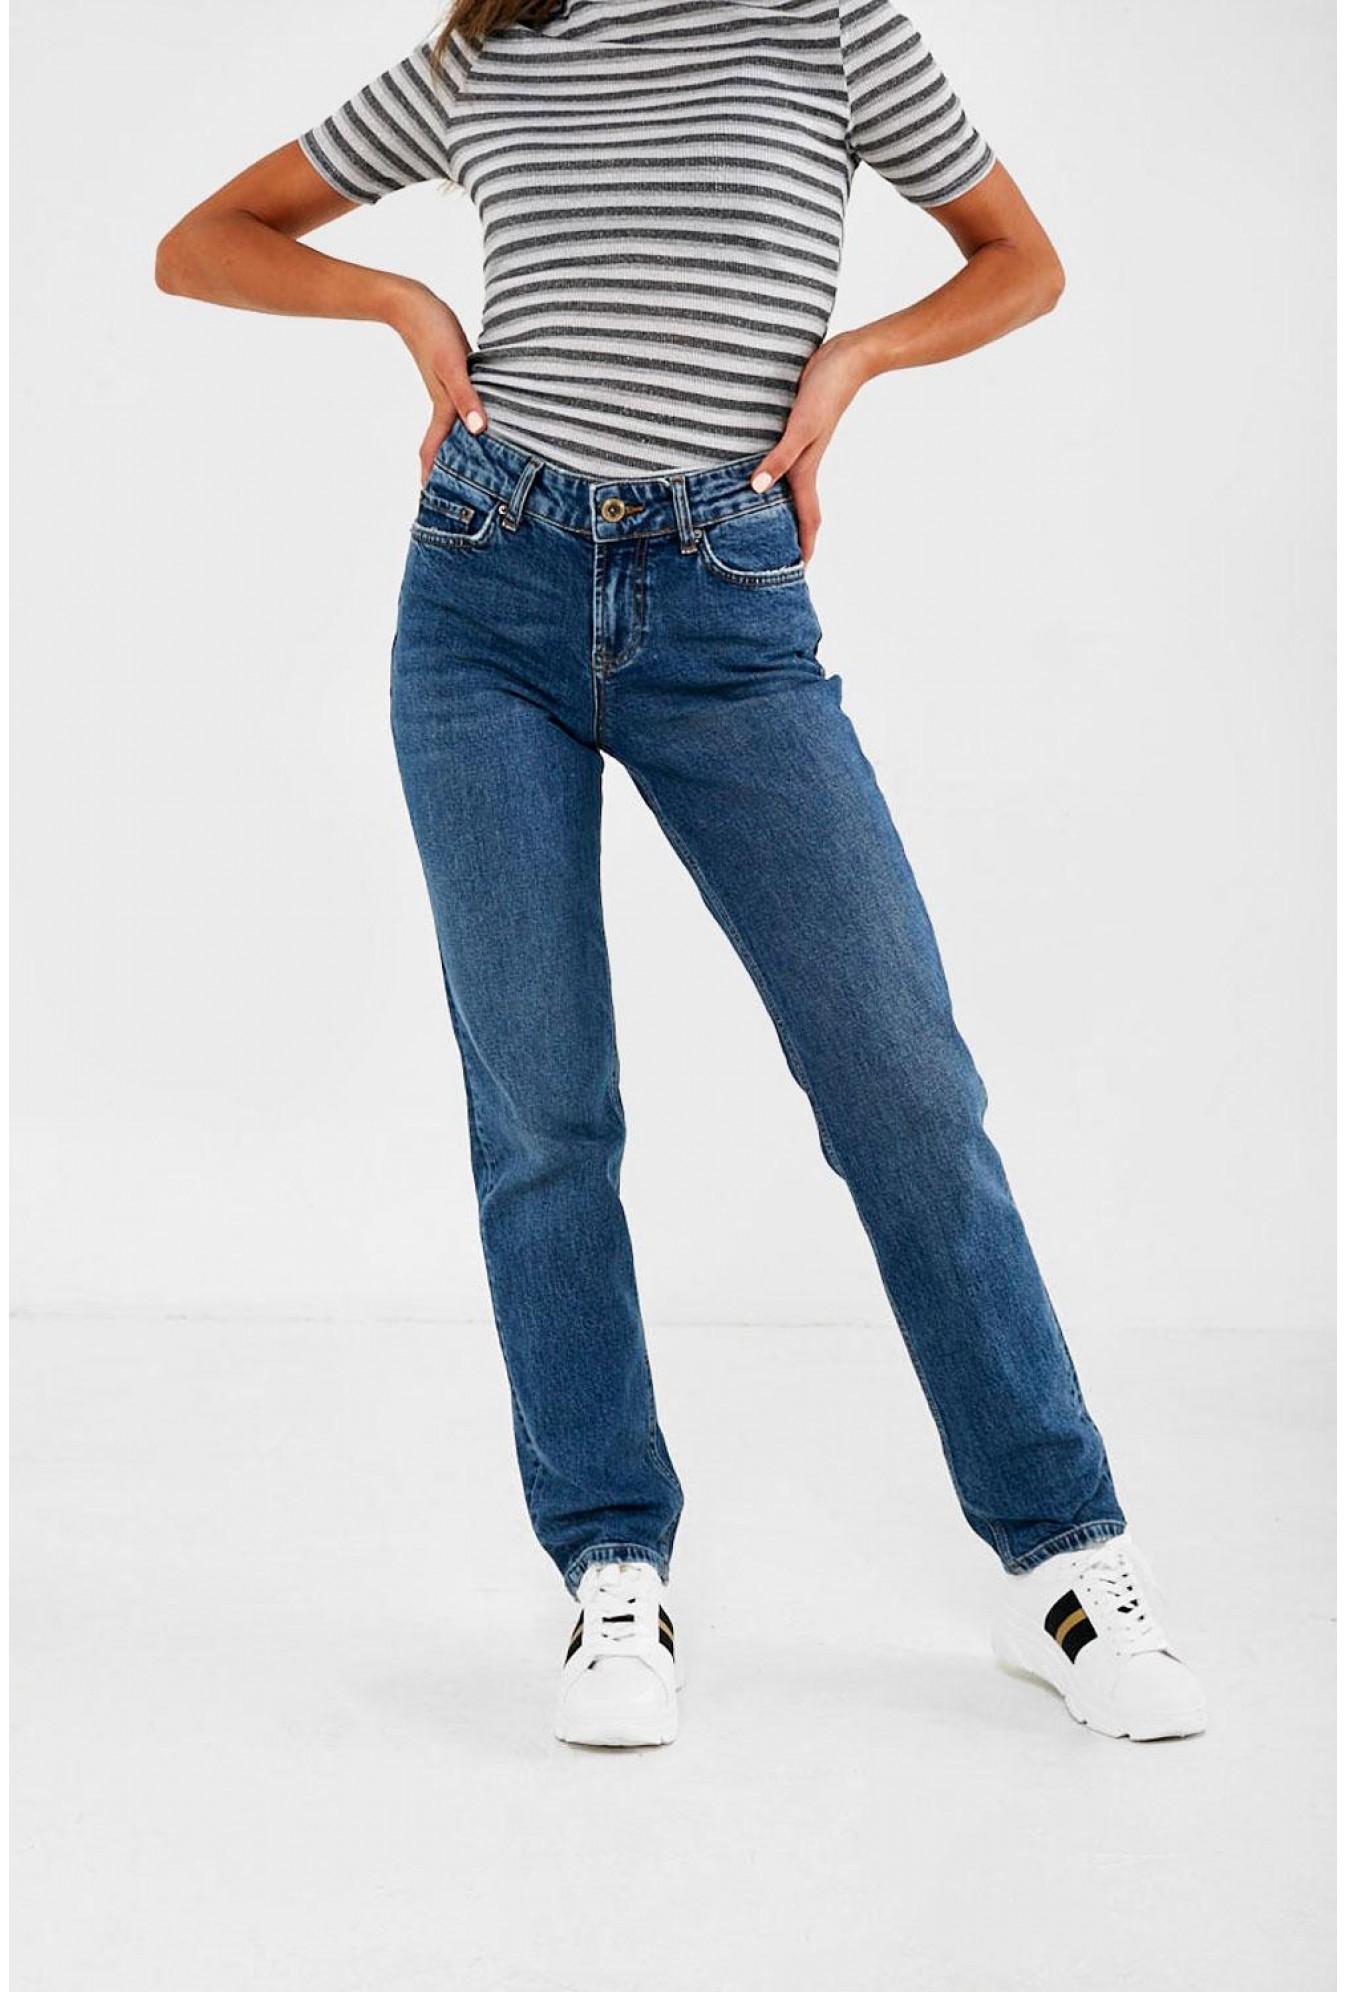 Vero Moda Sophy Straight Leg Jeans in 